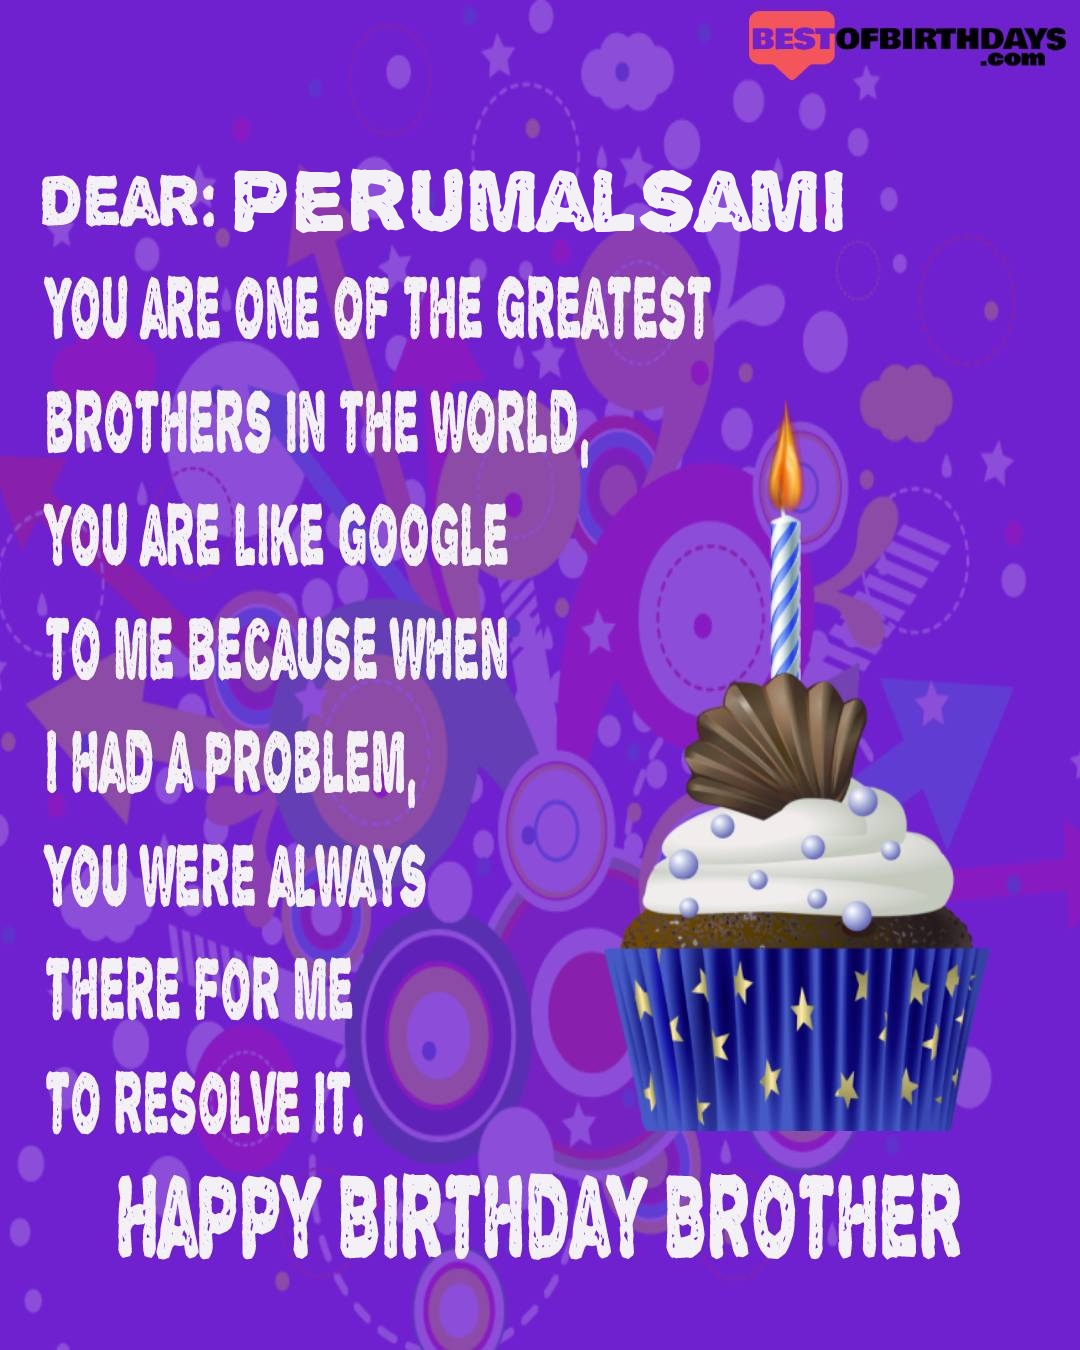 Happy birthday perumalsami bhai brother bro